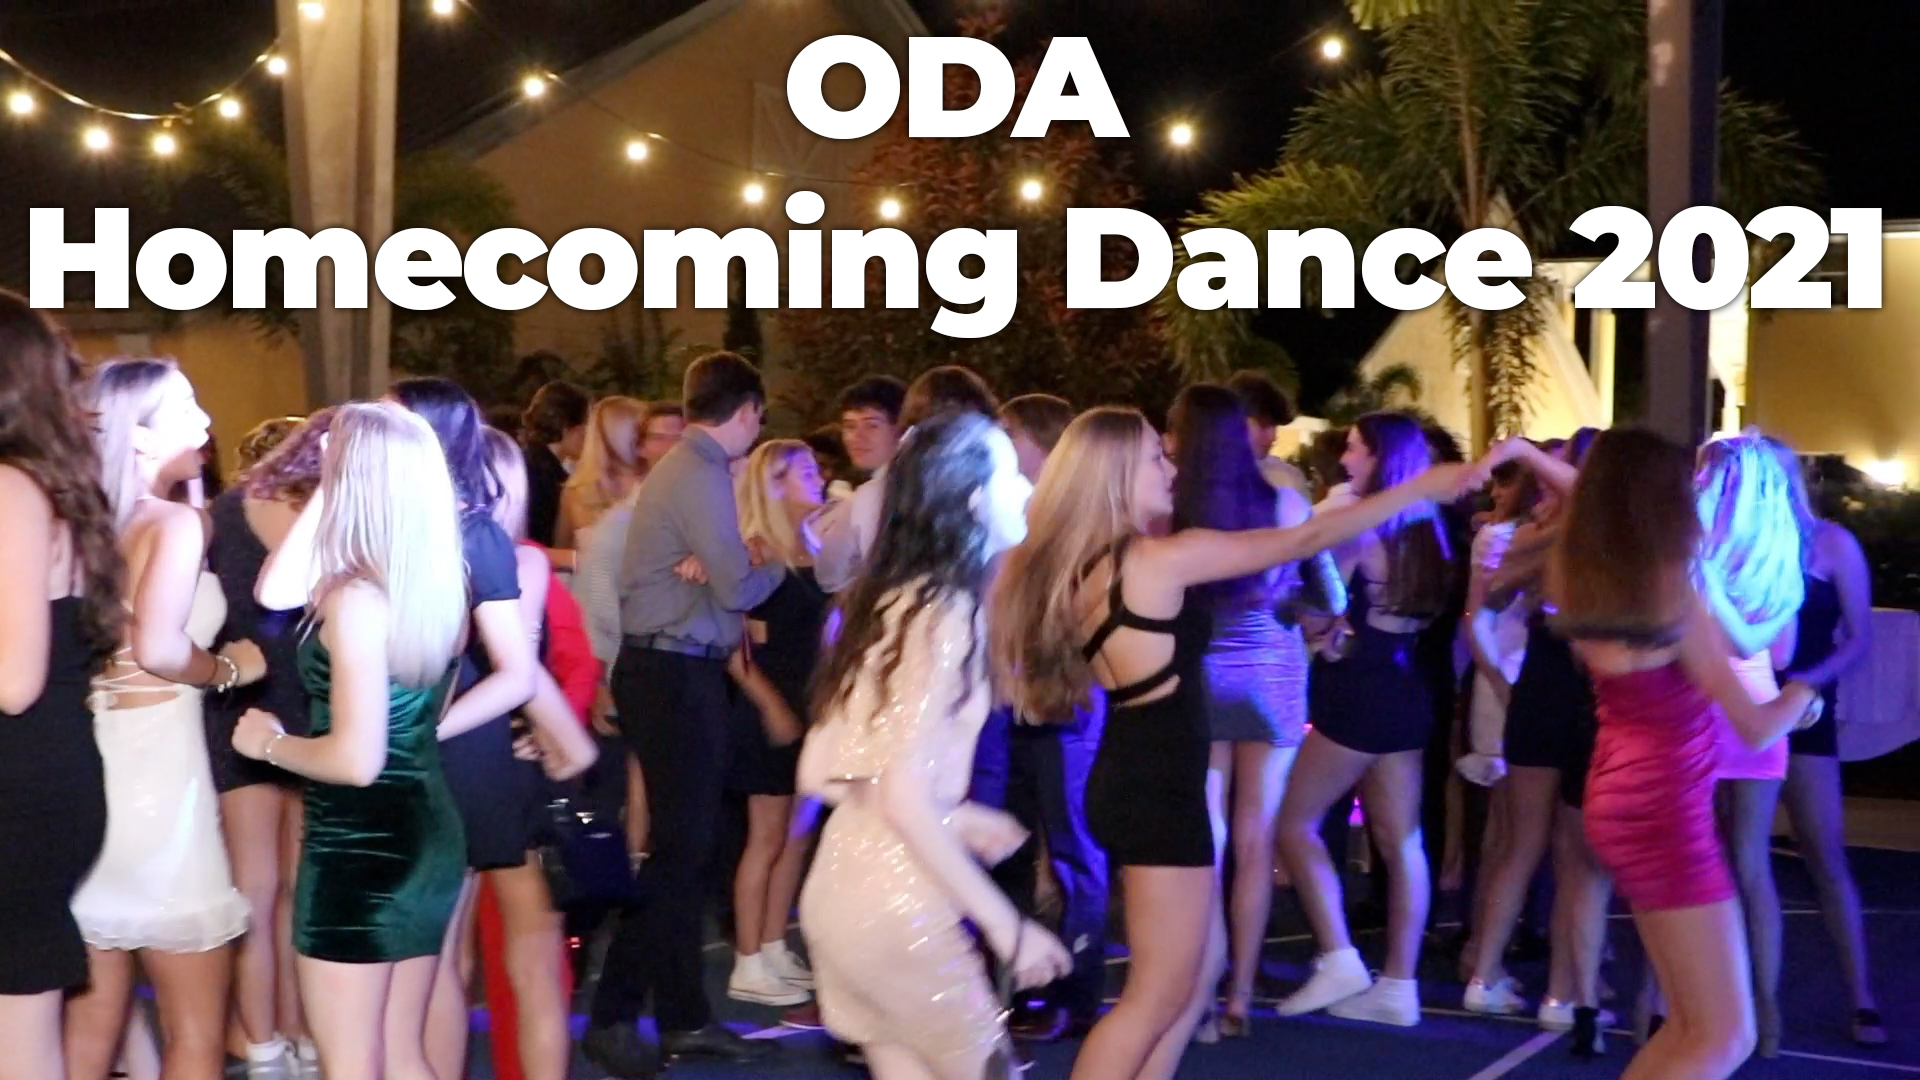 ODA Homecoming Dance 2021